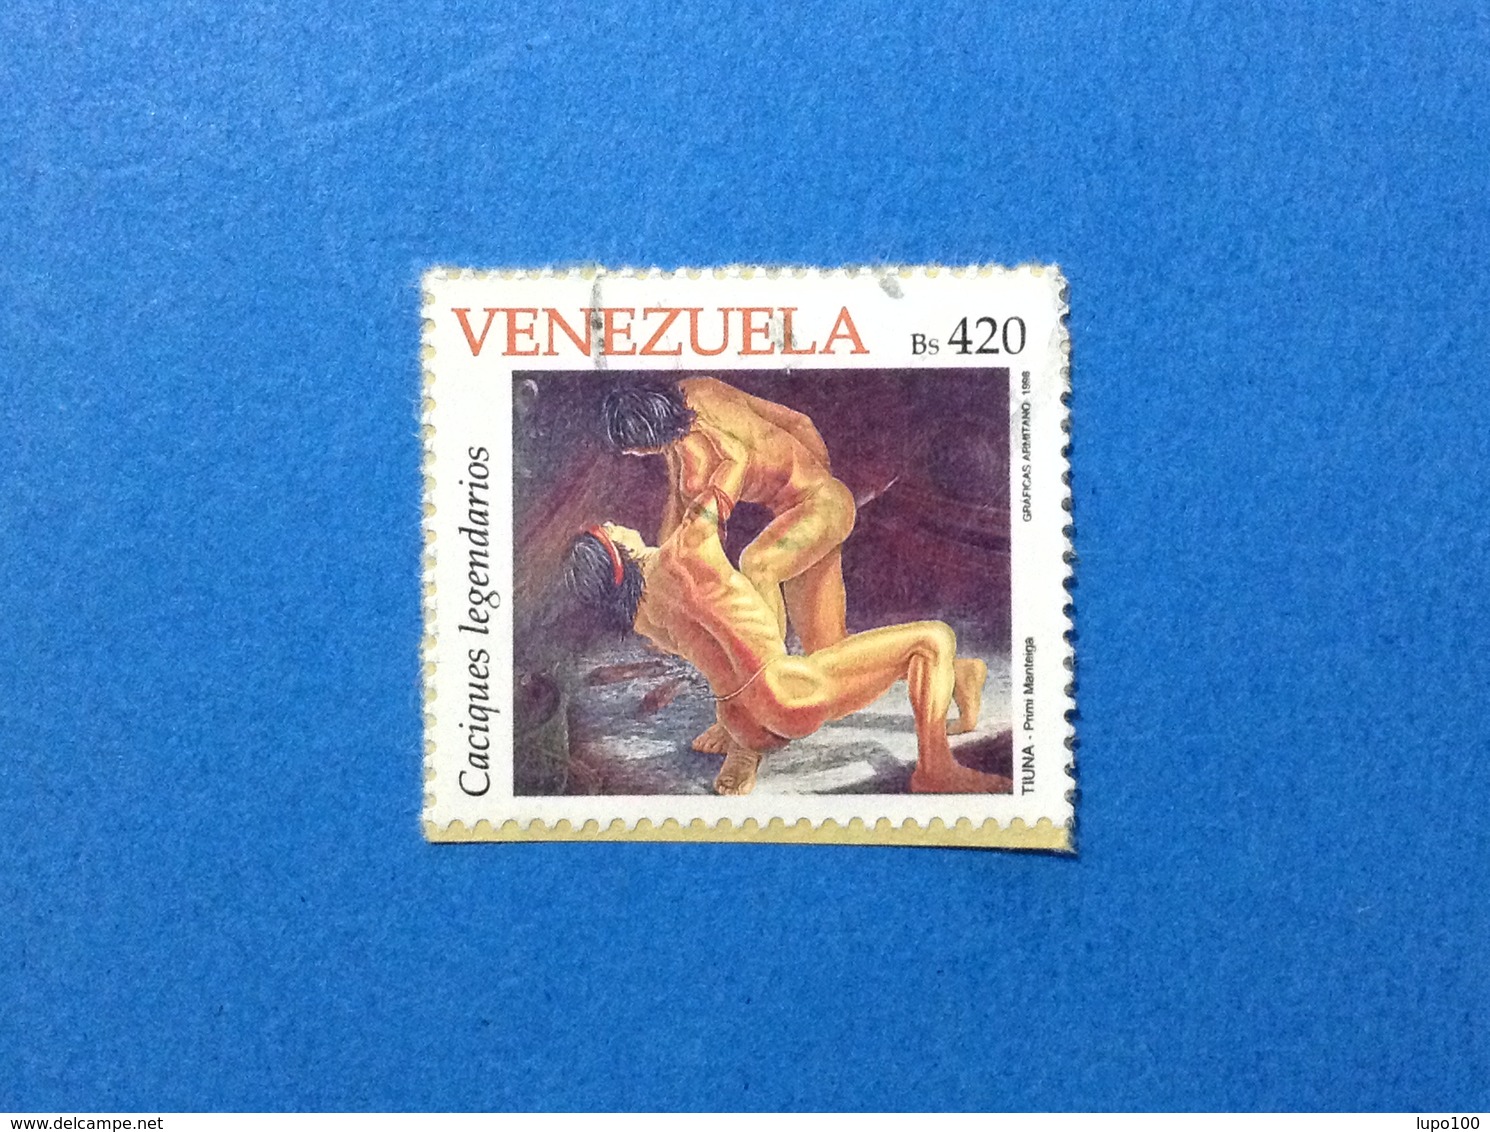 1998 VENEZUELA FRANCOBOLLO USATO STAMP USED NATIVI AMERICANI TIUNA PRIMI MANTEIGA 420 BS - Venezuela